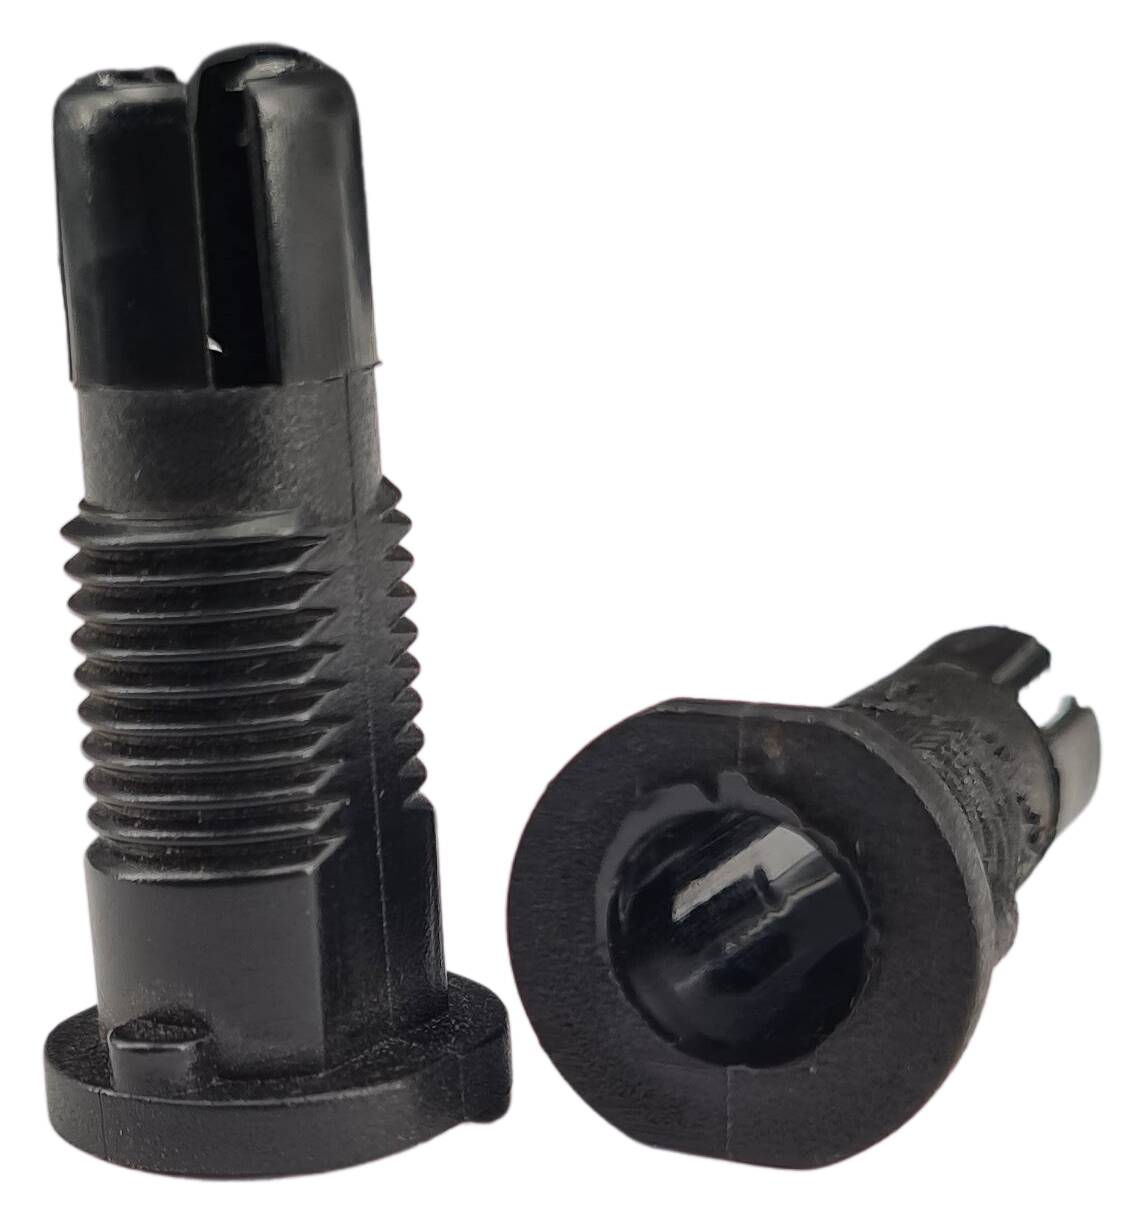 plastic cord grip 25 inside part (round cable) black